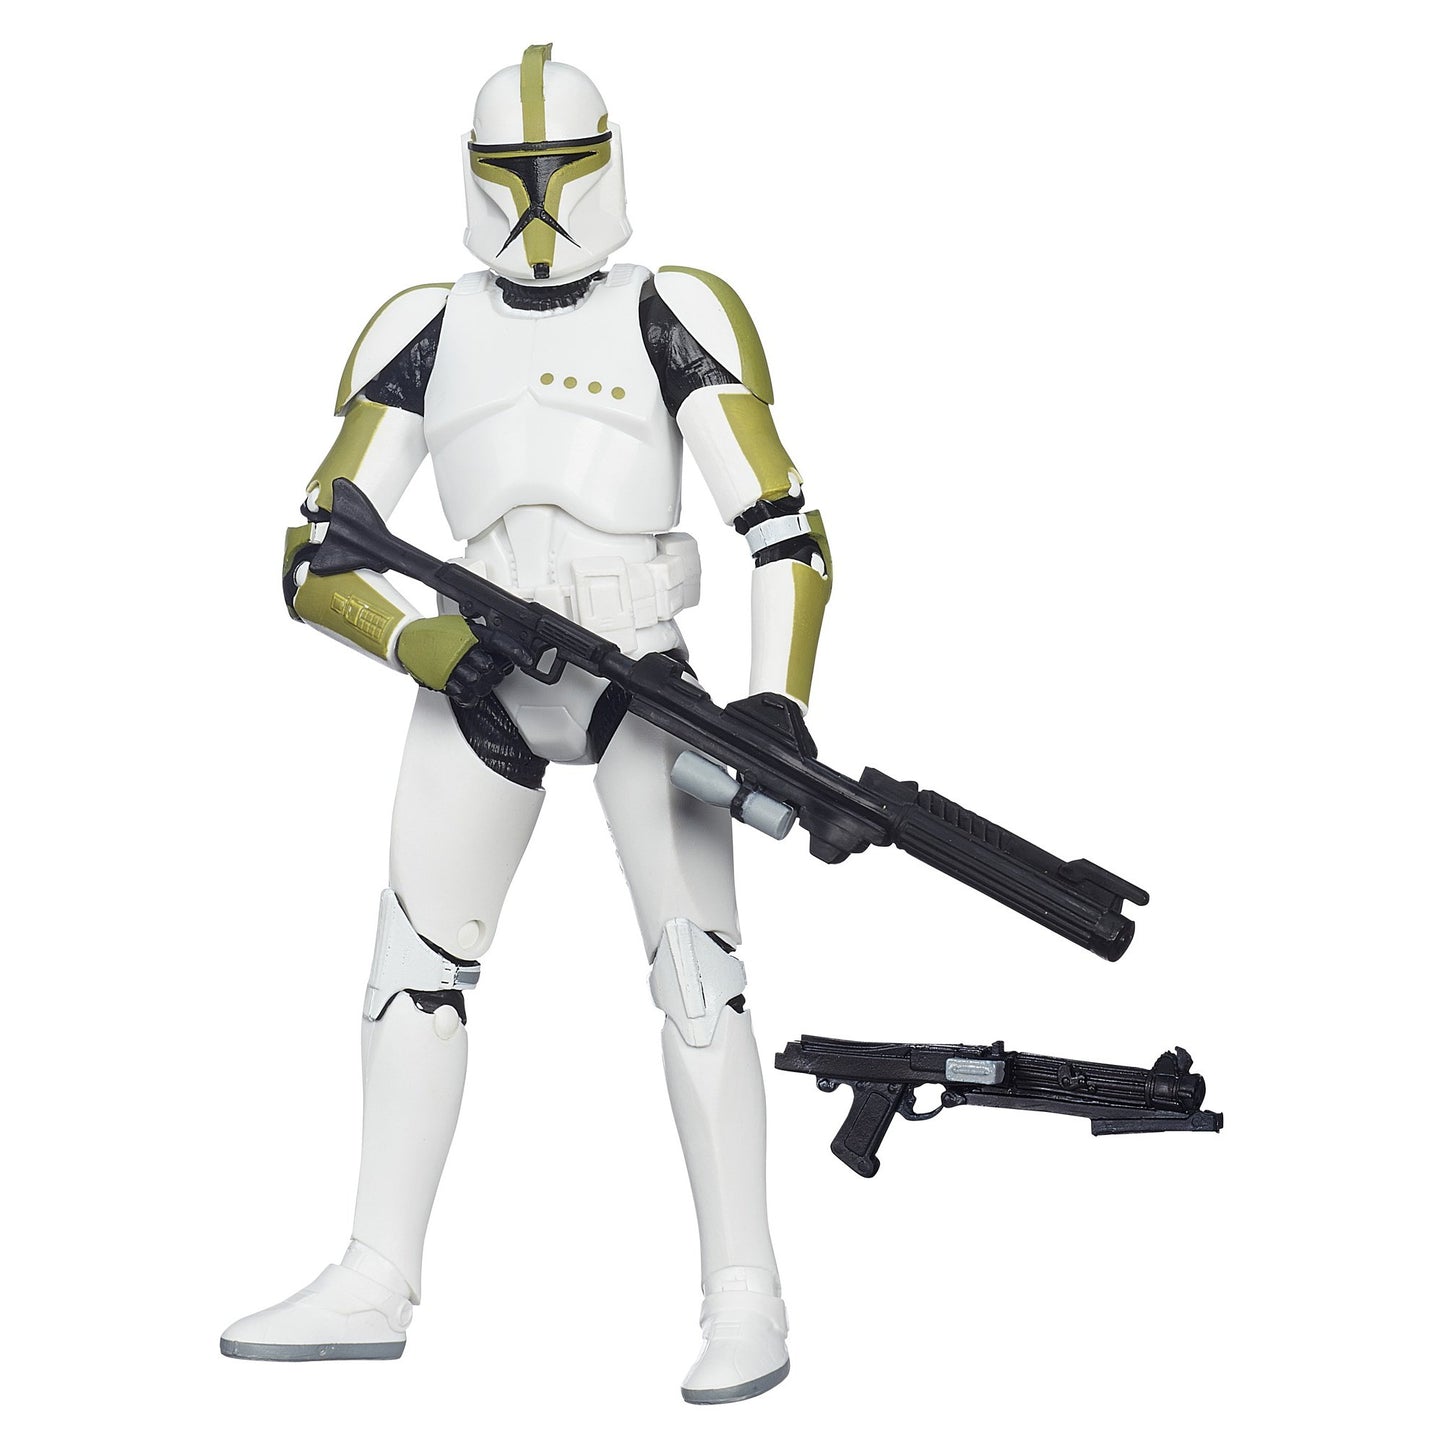 Star Wars Black Series 6 inch Clone Trooper Sergeant